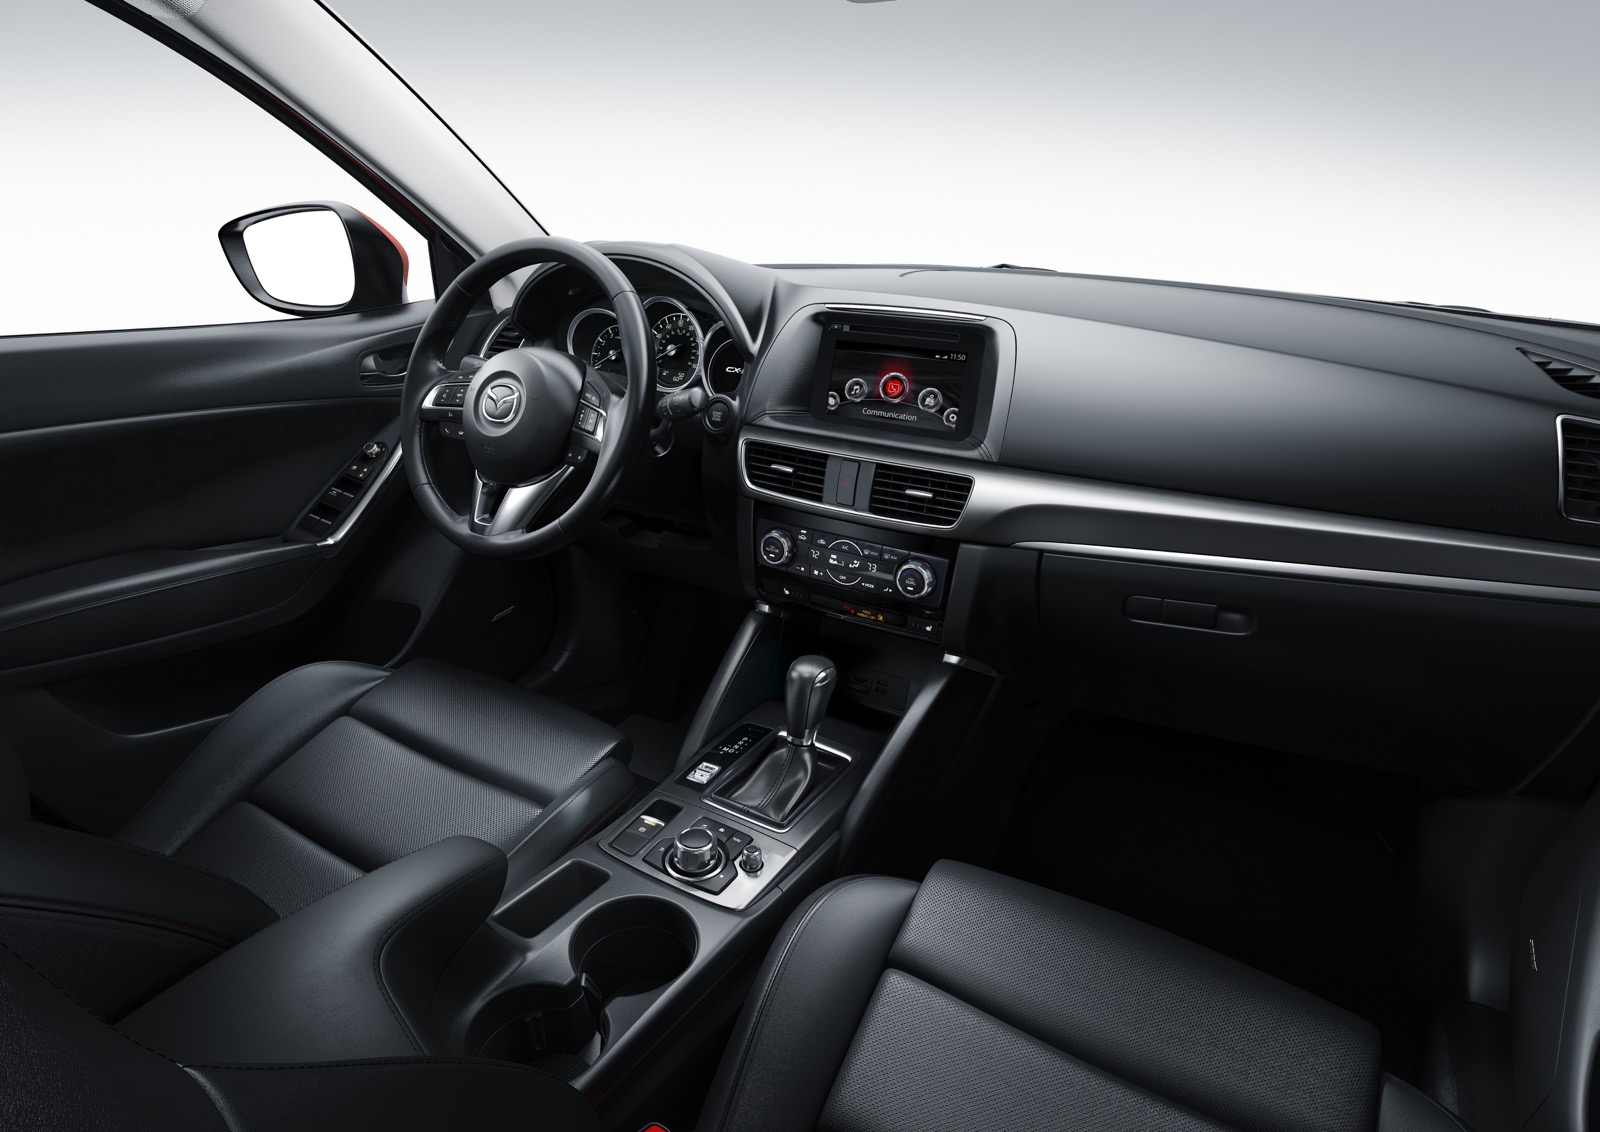 2015 Mazda Cx 5 Details Revealed Photos Caradvice